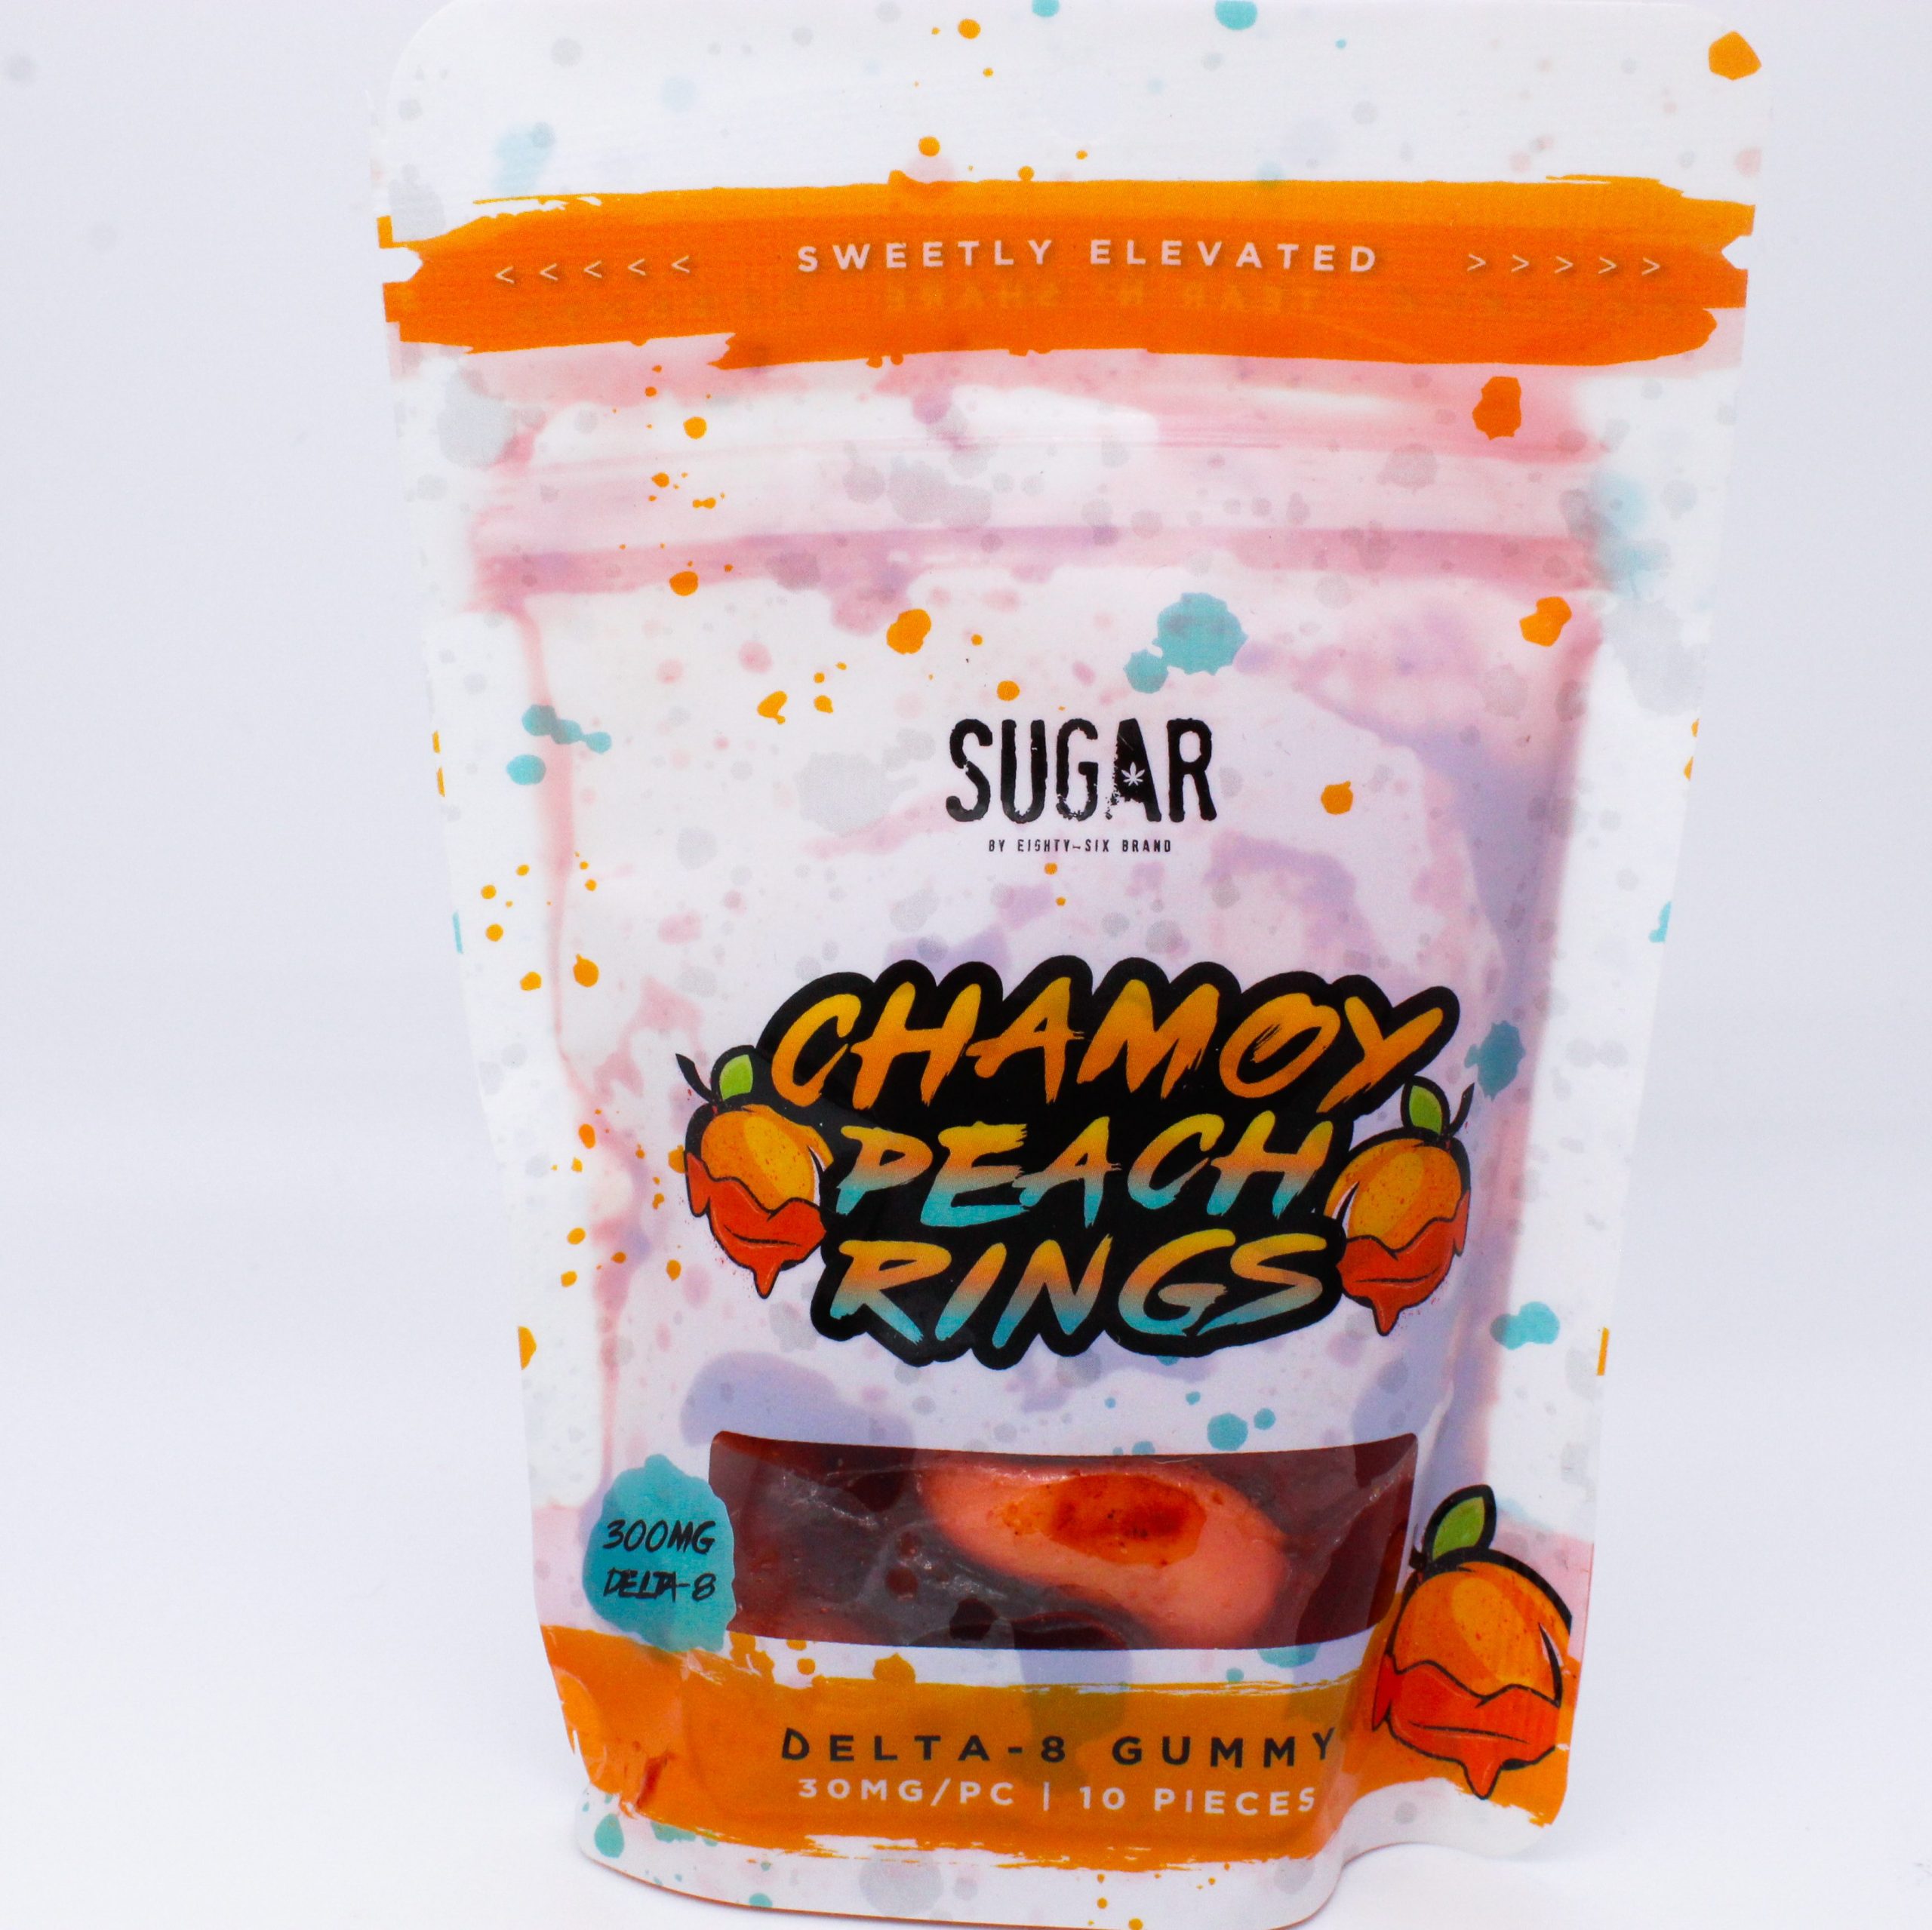 chamoy peach rings